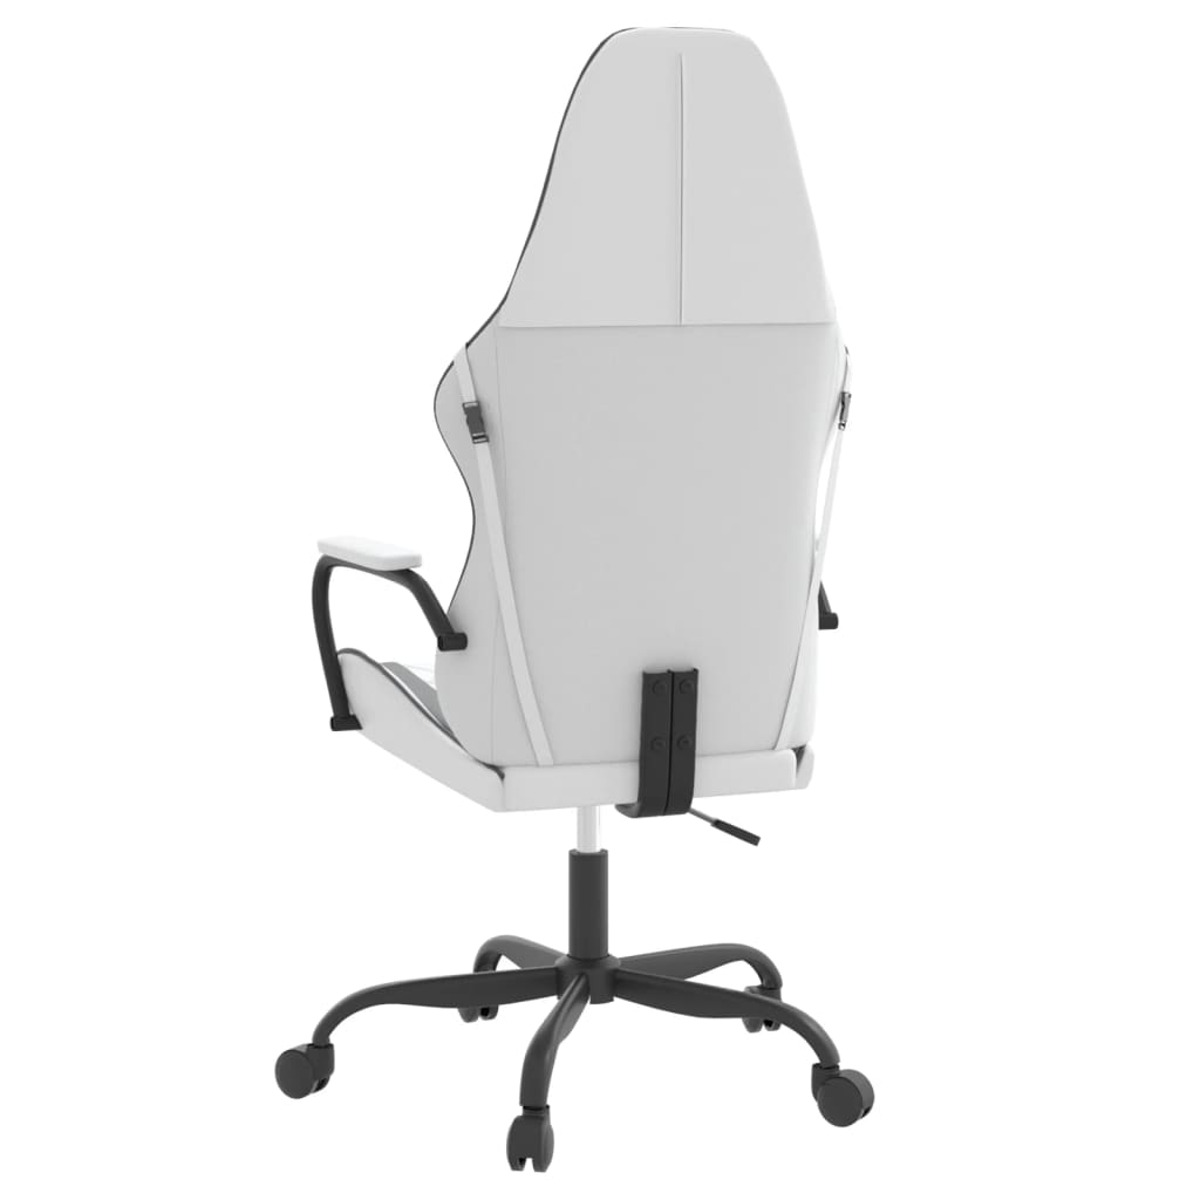 VIDAXL 345543 Gaming Stuhl, Weiß